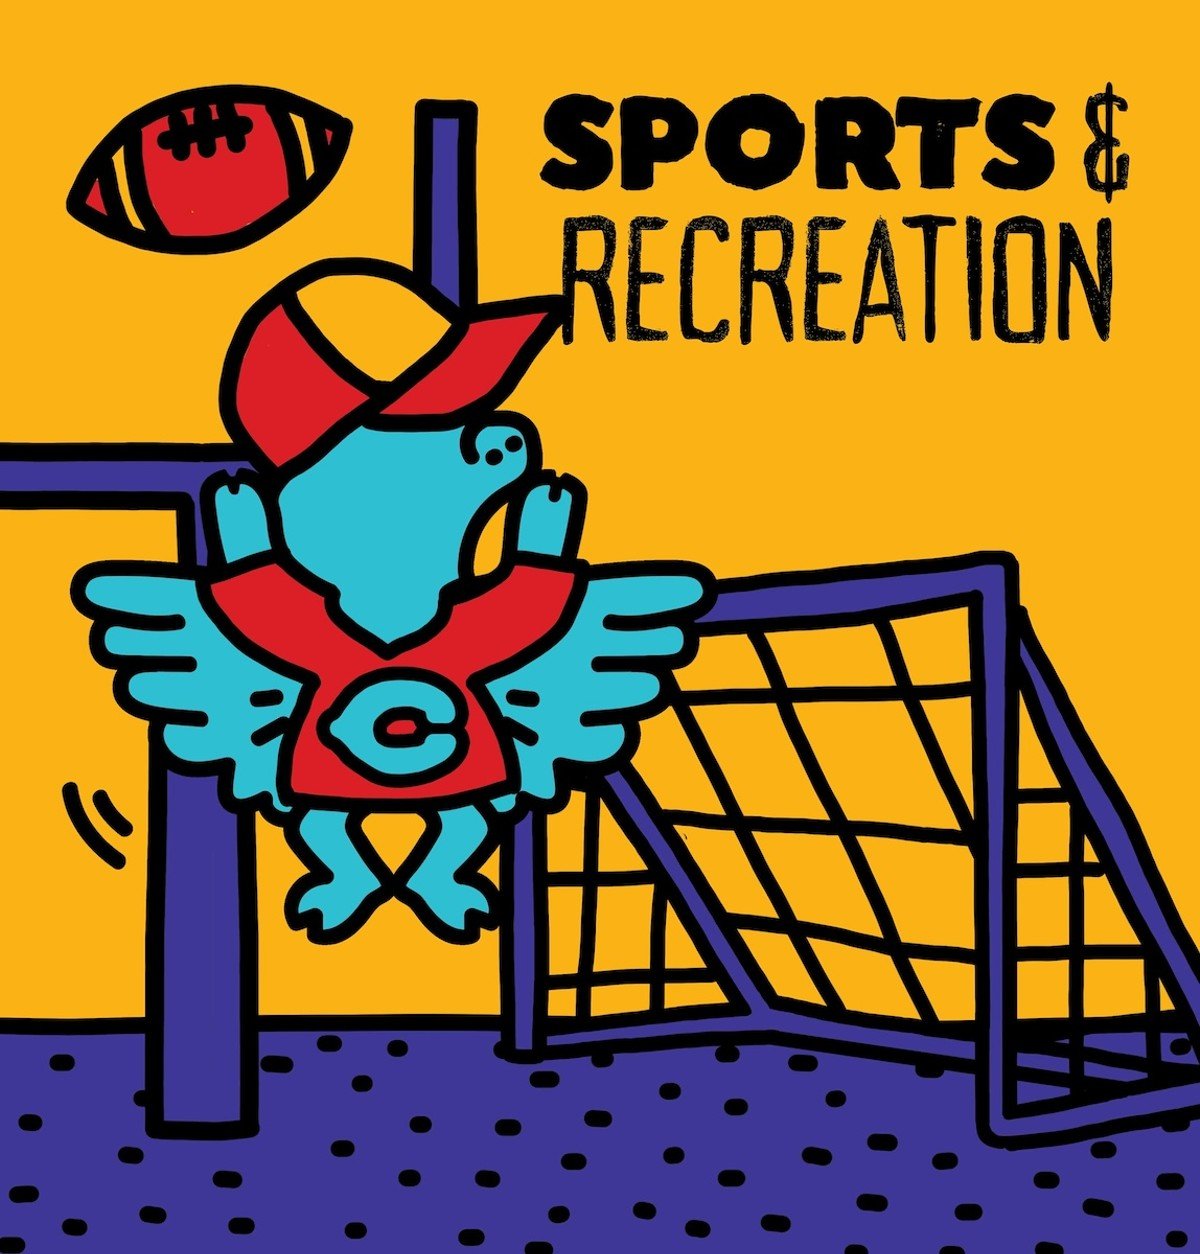 Best Of Cincinnati® Reader and Staff Pick winners for Sports & Recreation